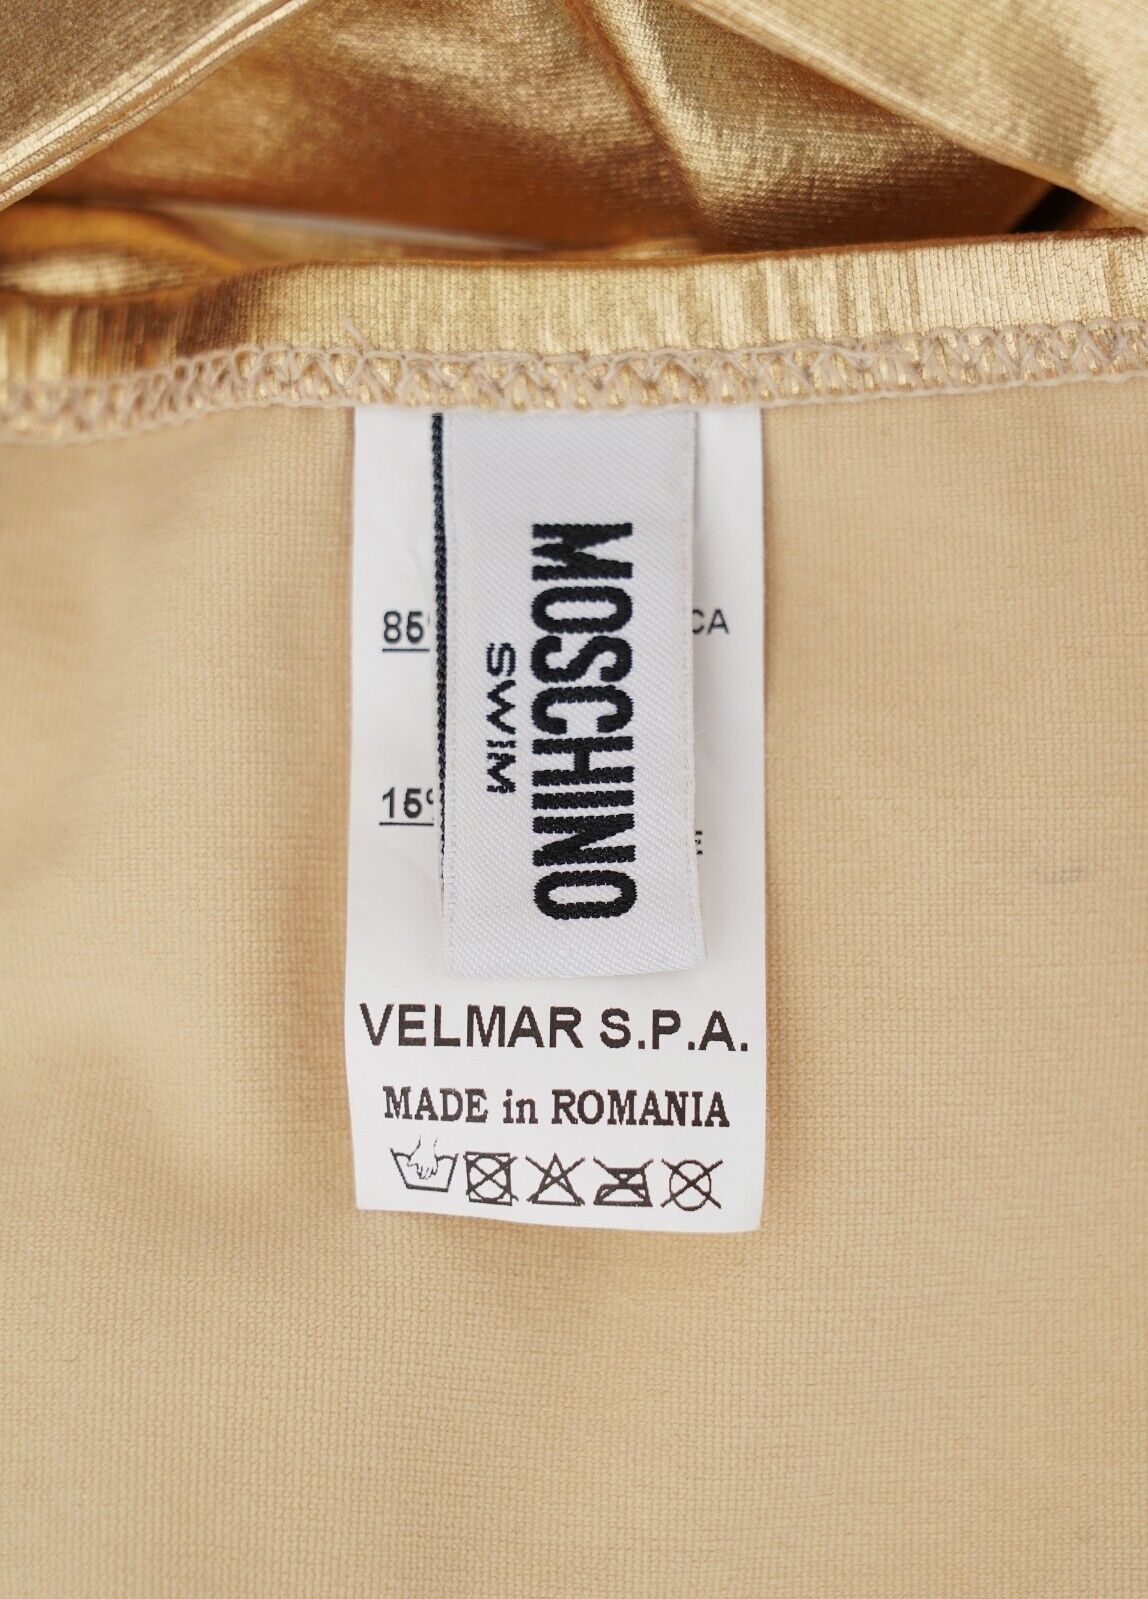 Velmar Spa Moschino Store | website.jkuat.ac.ke